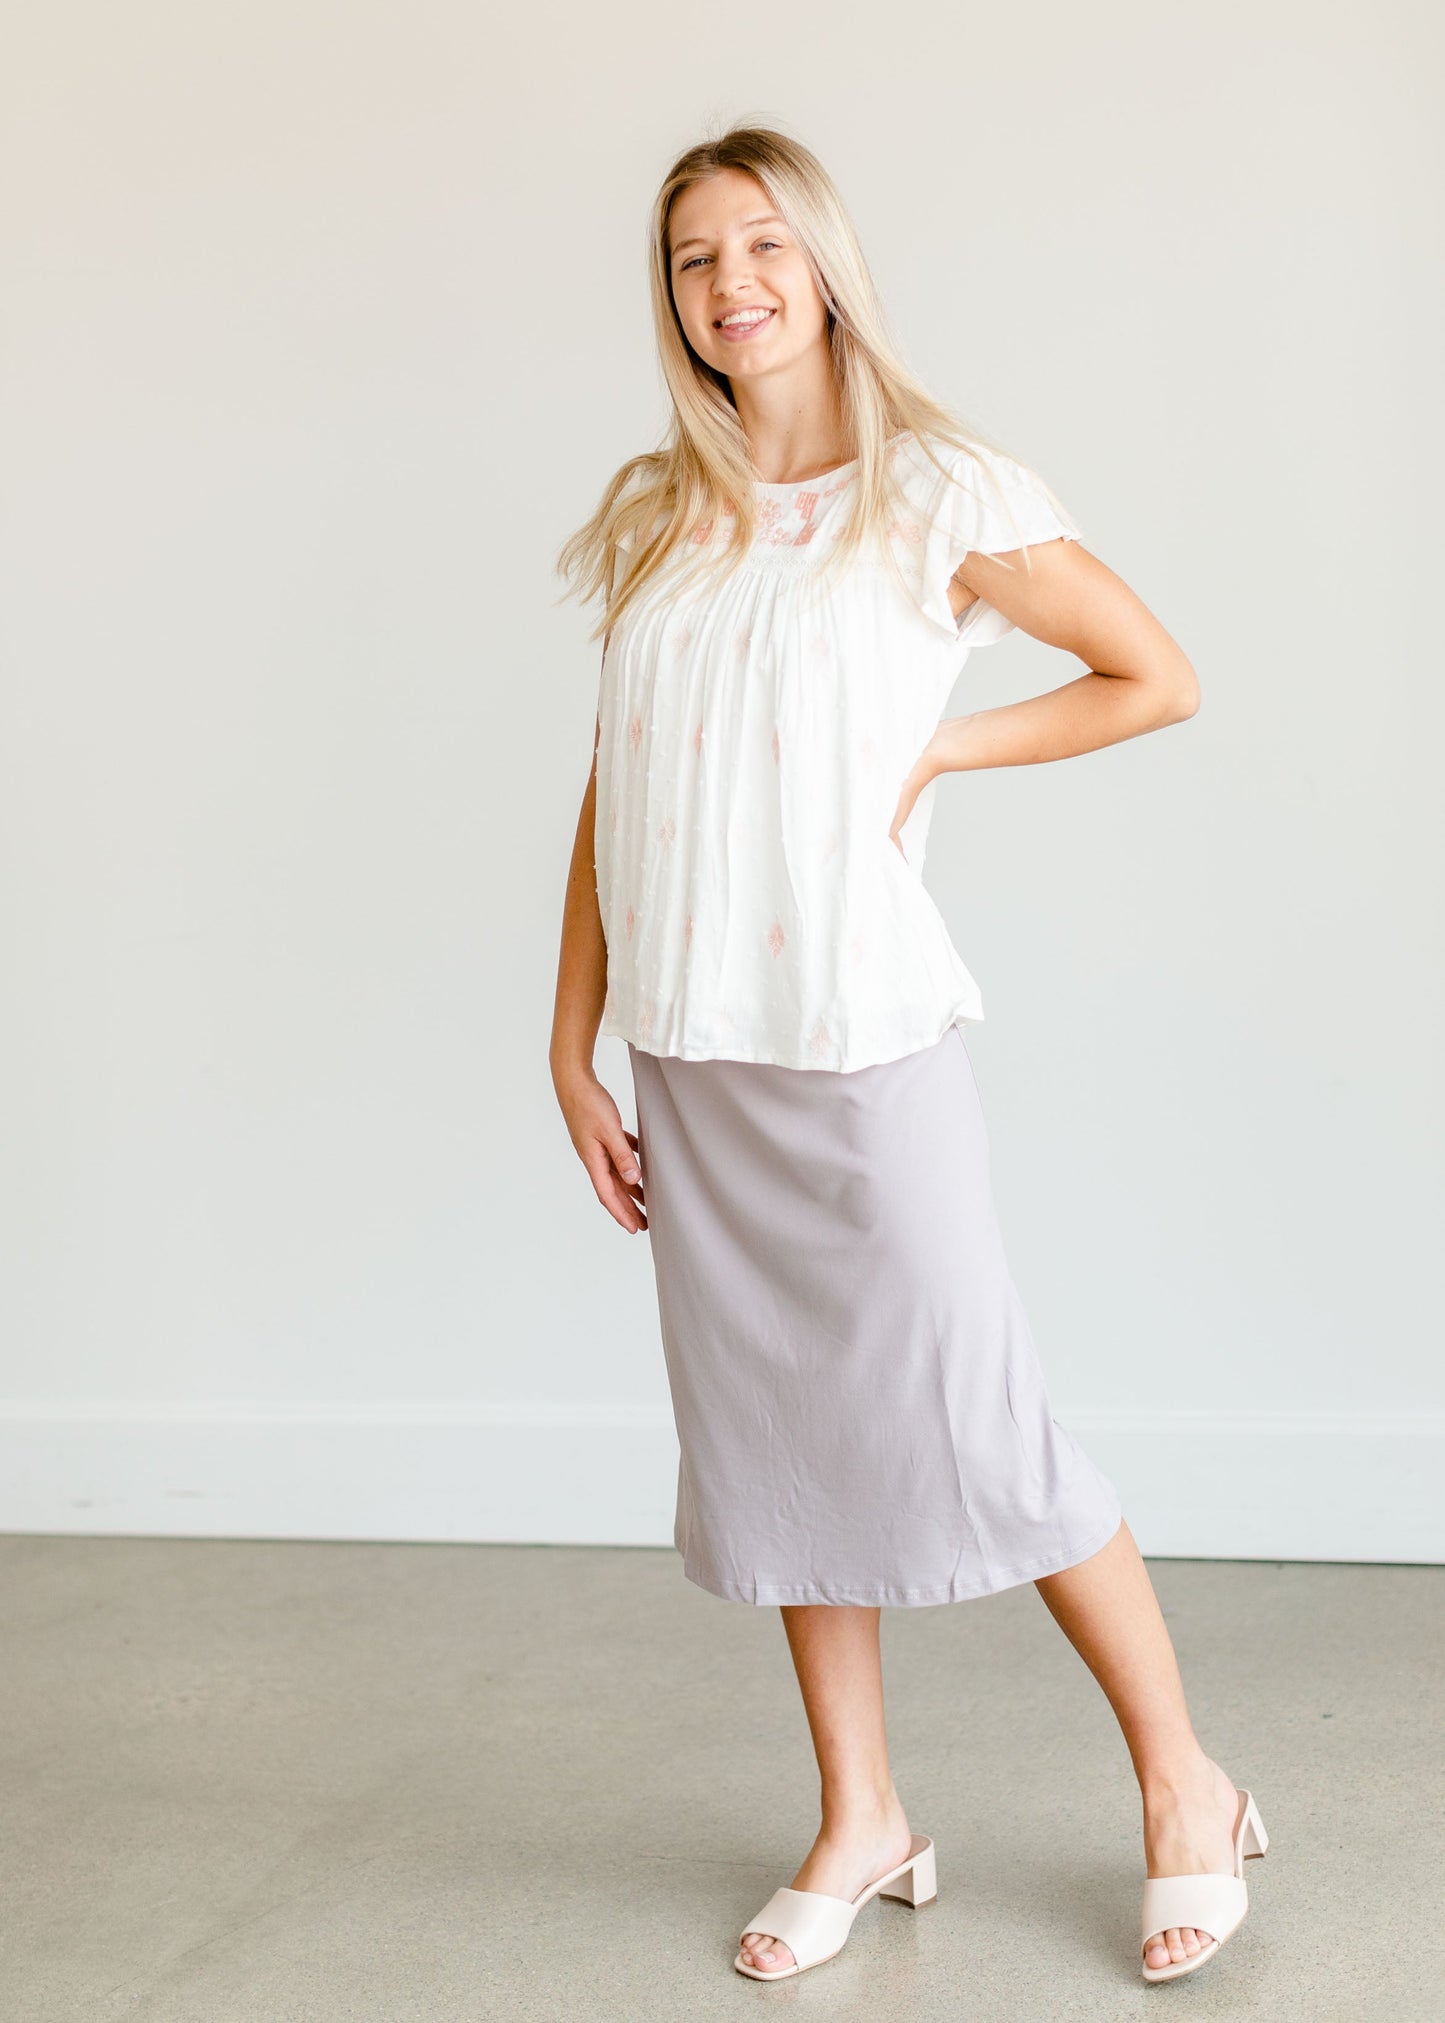 Emily Gray Knit Midi Skirt - FINAL SALE Skirts